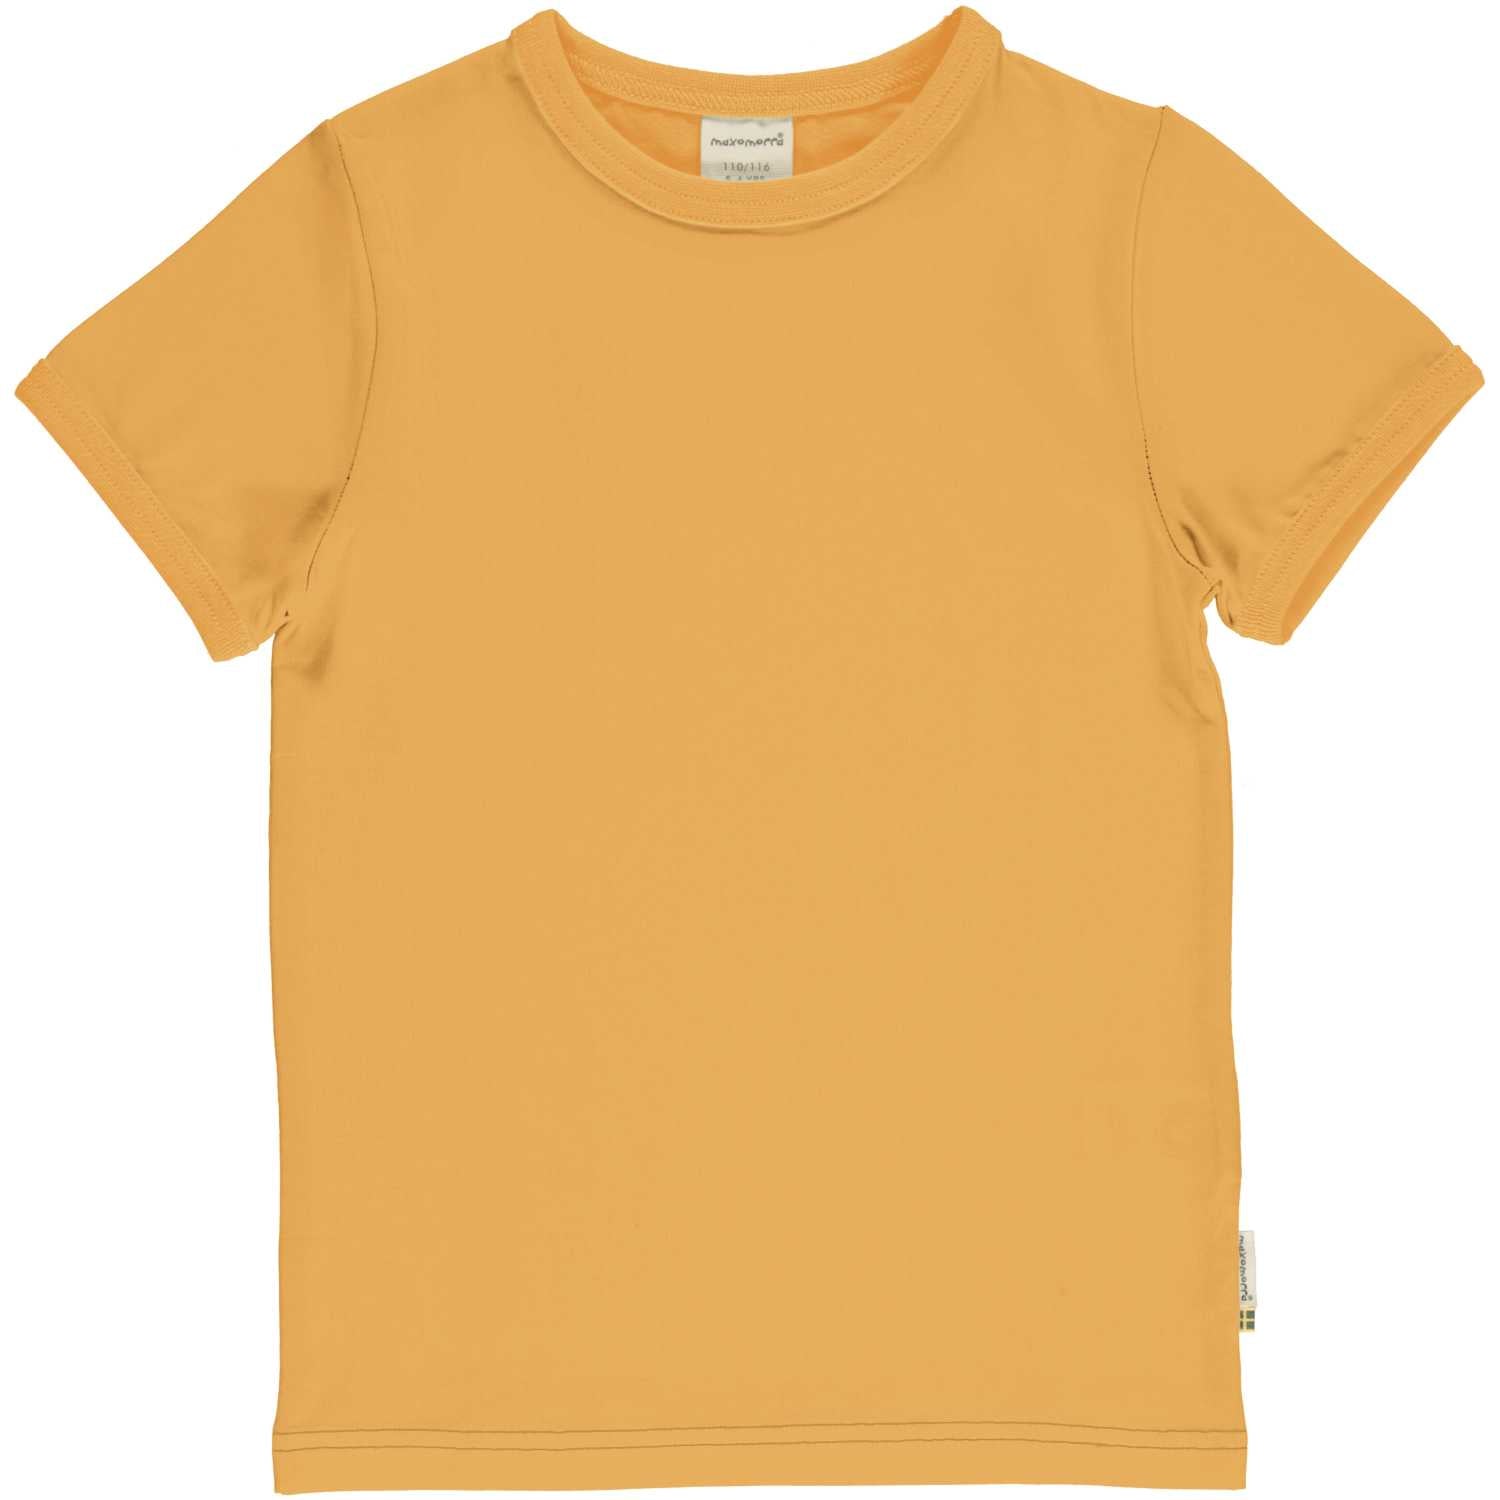 Maxomorra Solid T-Shirt Dxbas12-Sxbas35 Yellow Clothing 3-4YRS / Yellow,5-6YRS / Yellow,7-8YRS / Yellow